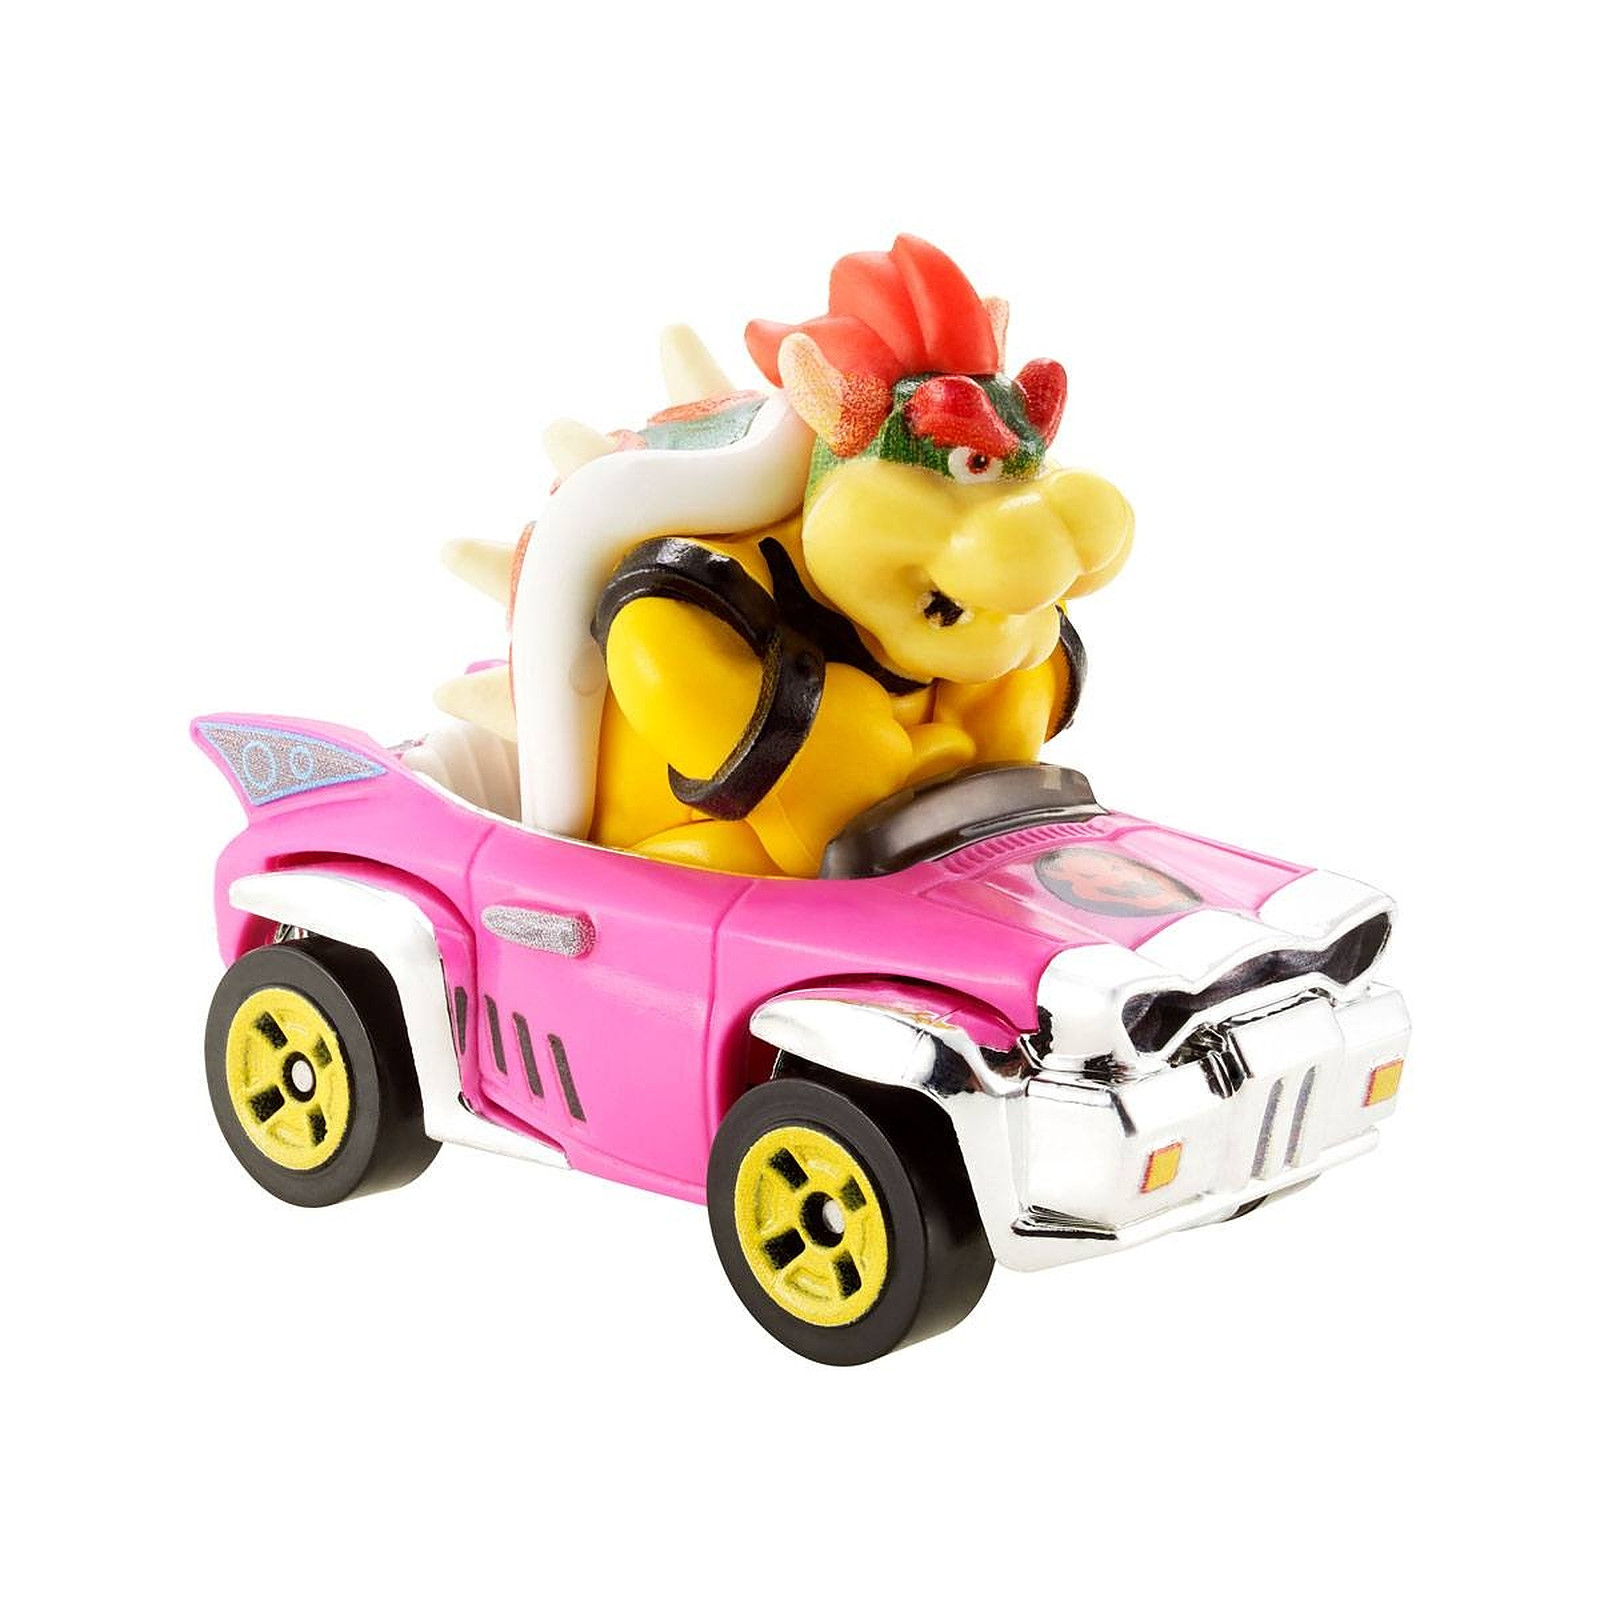 Mario Kart - Vehicule metal Hot Wheels 1/64 Bowser (Badwagon) 8 cm - Figurines Mattel